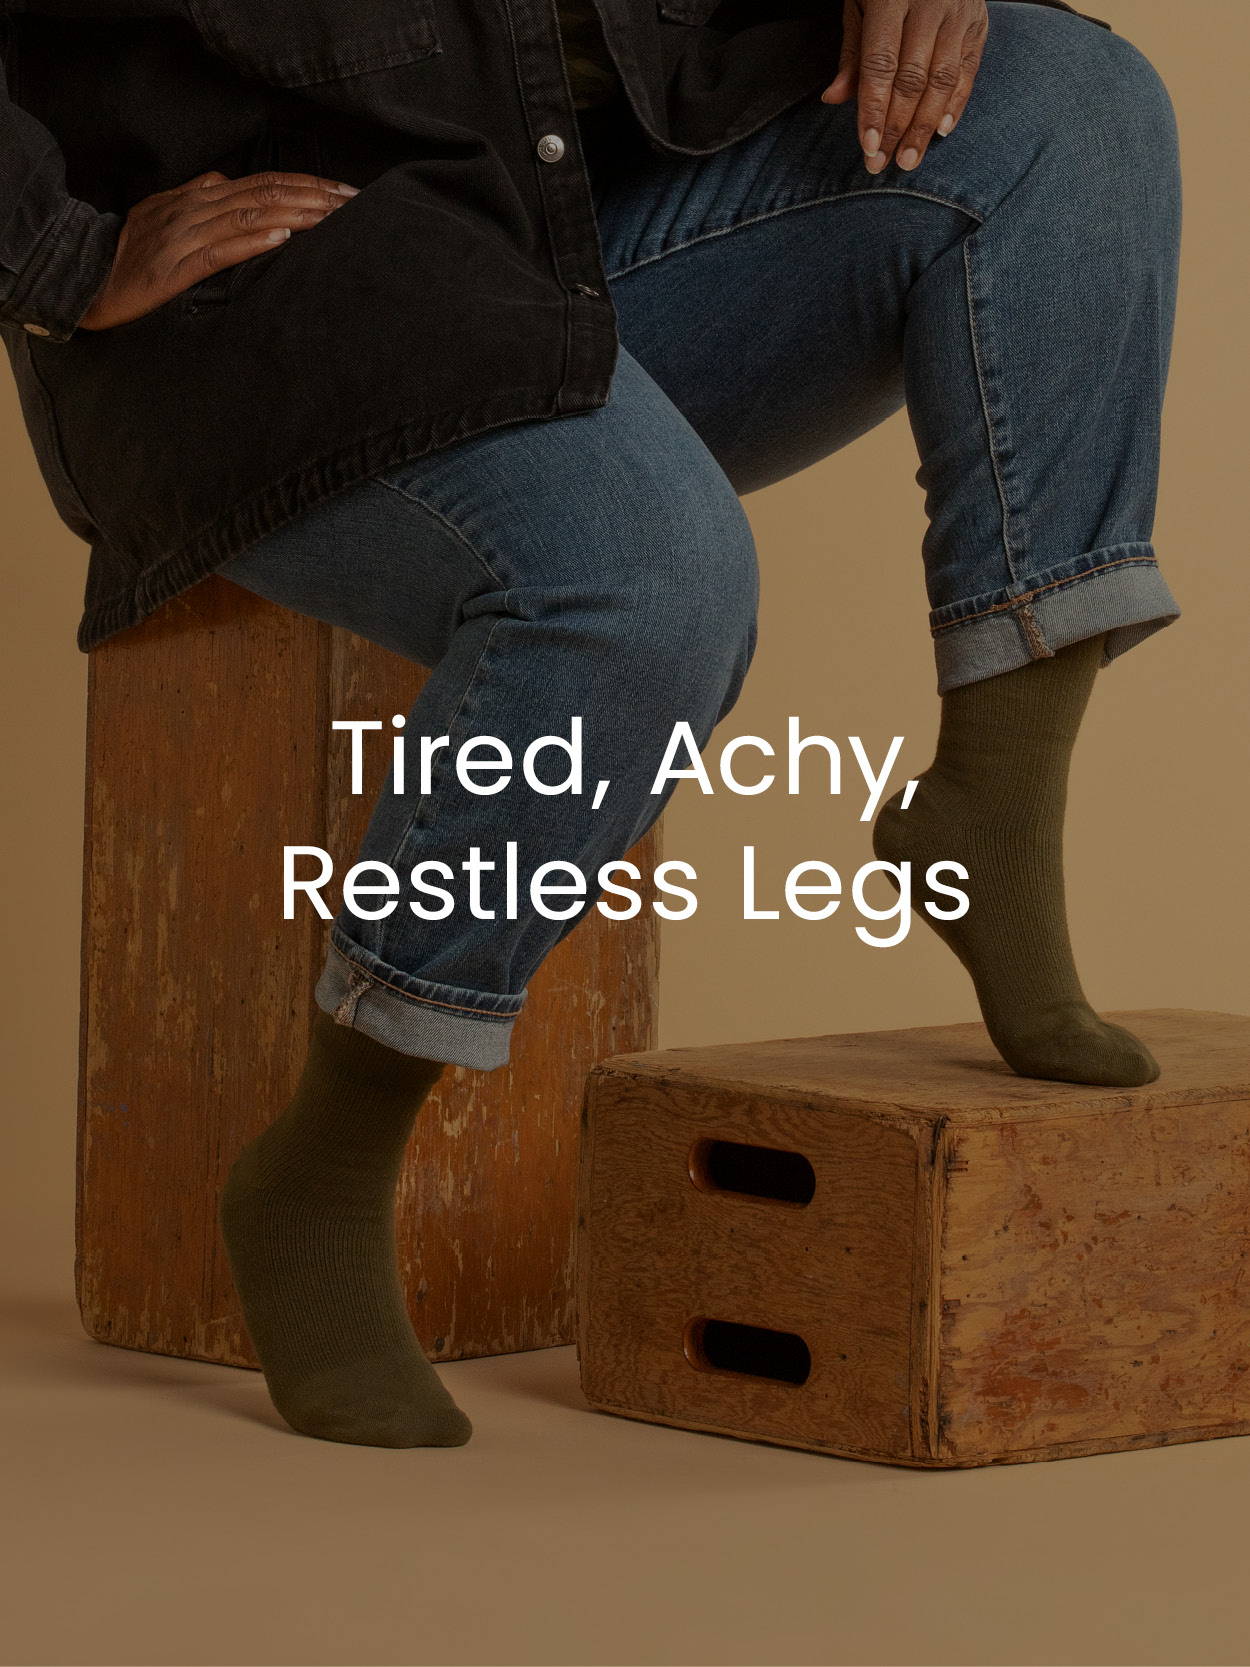 Tired, Achy, Restless Legs